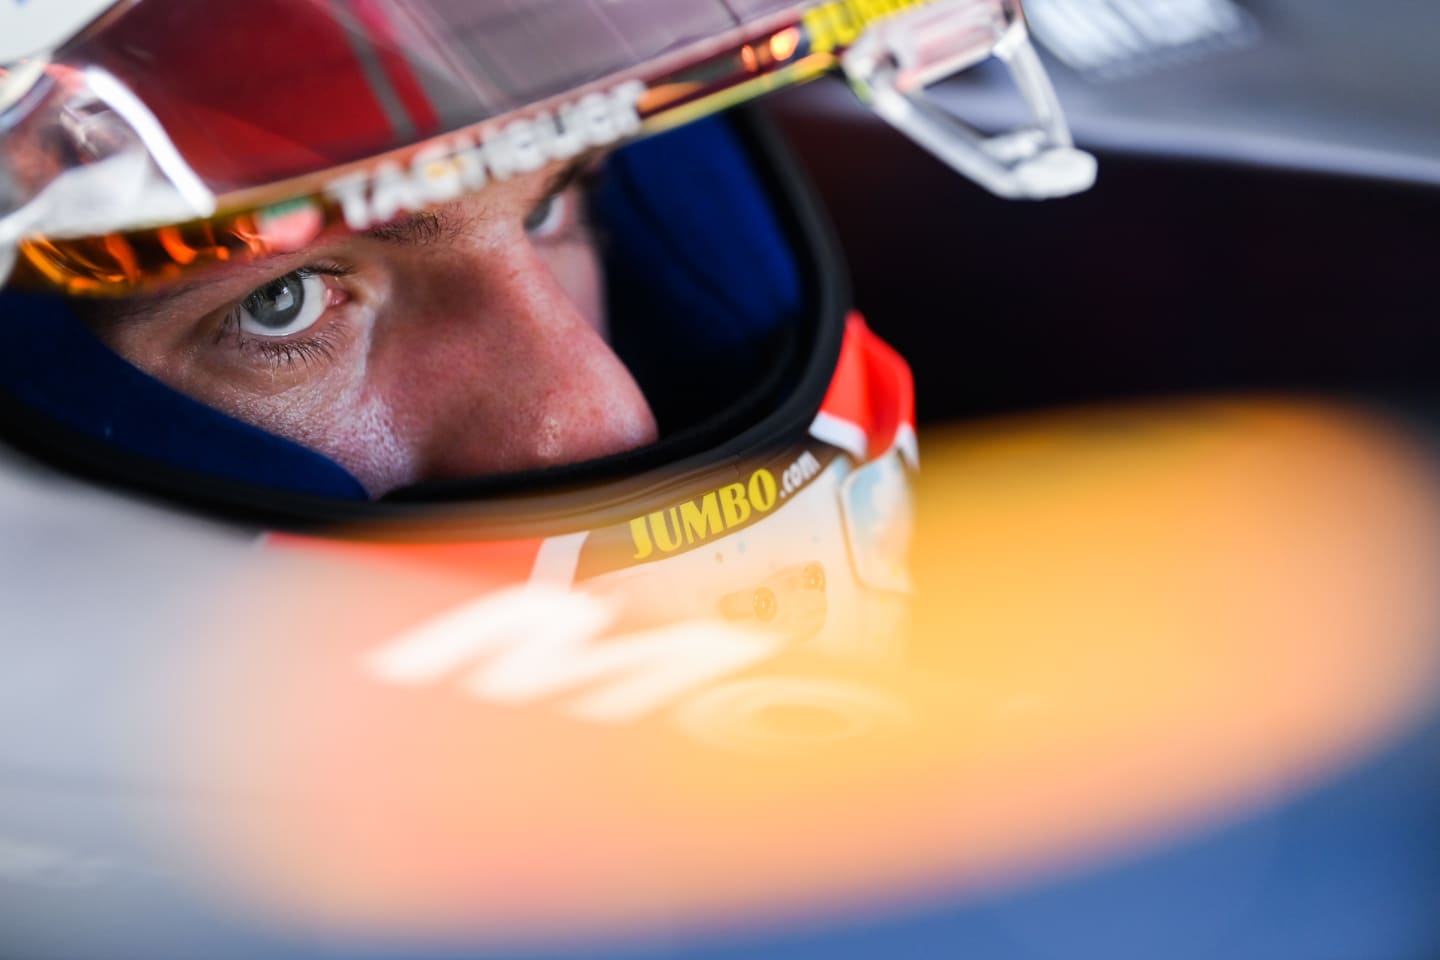 ZANDVOORT, NETHERLANDS - SEPTEMBER 03: Max Verstappen of Netherlands and Red Bull Racing looks on